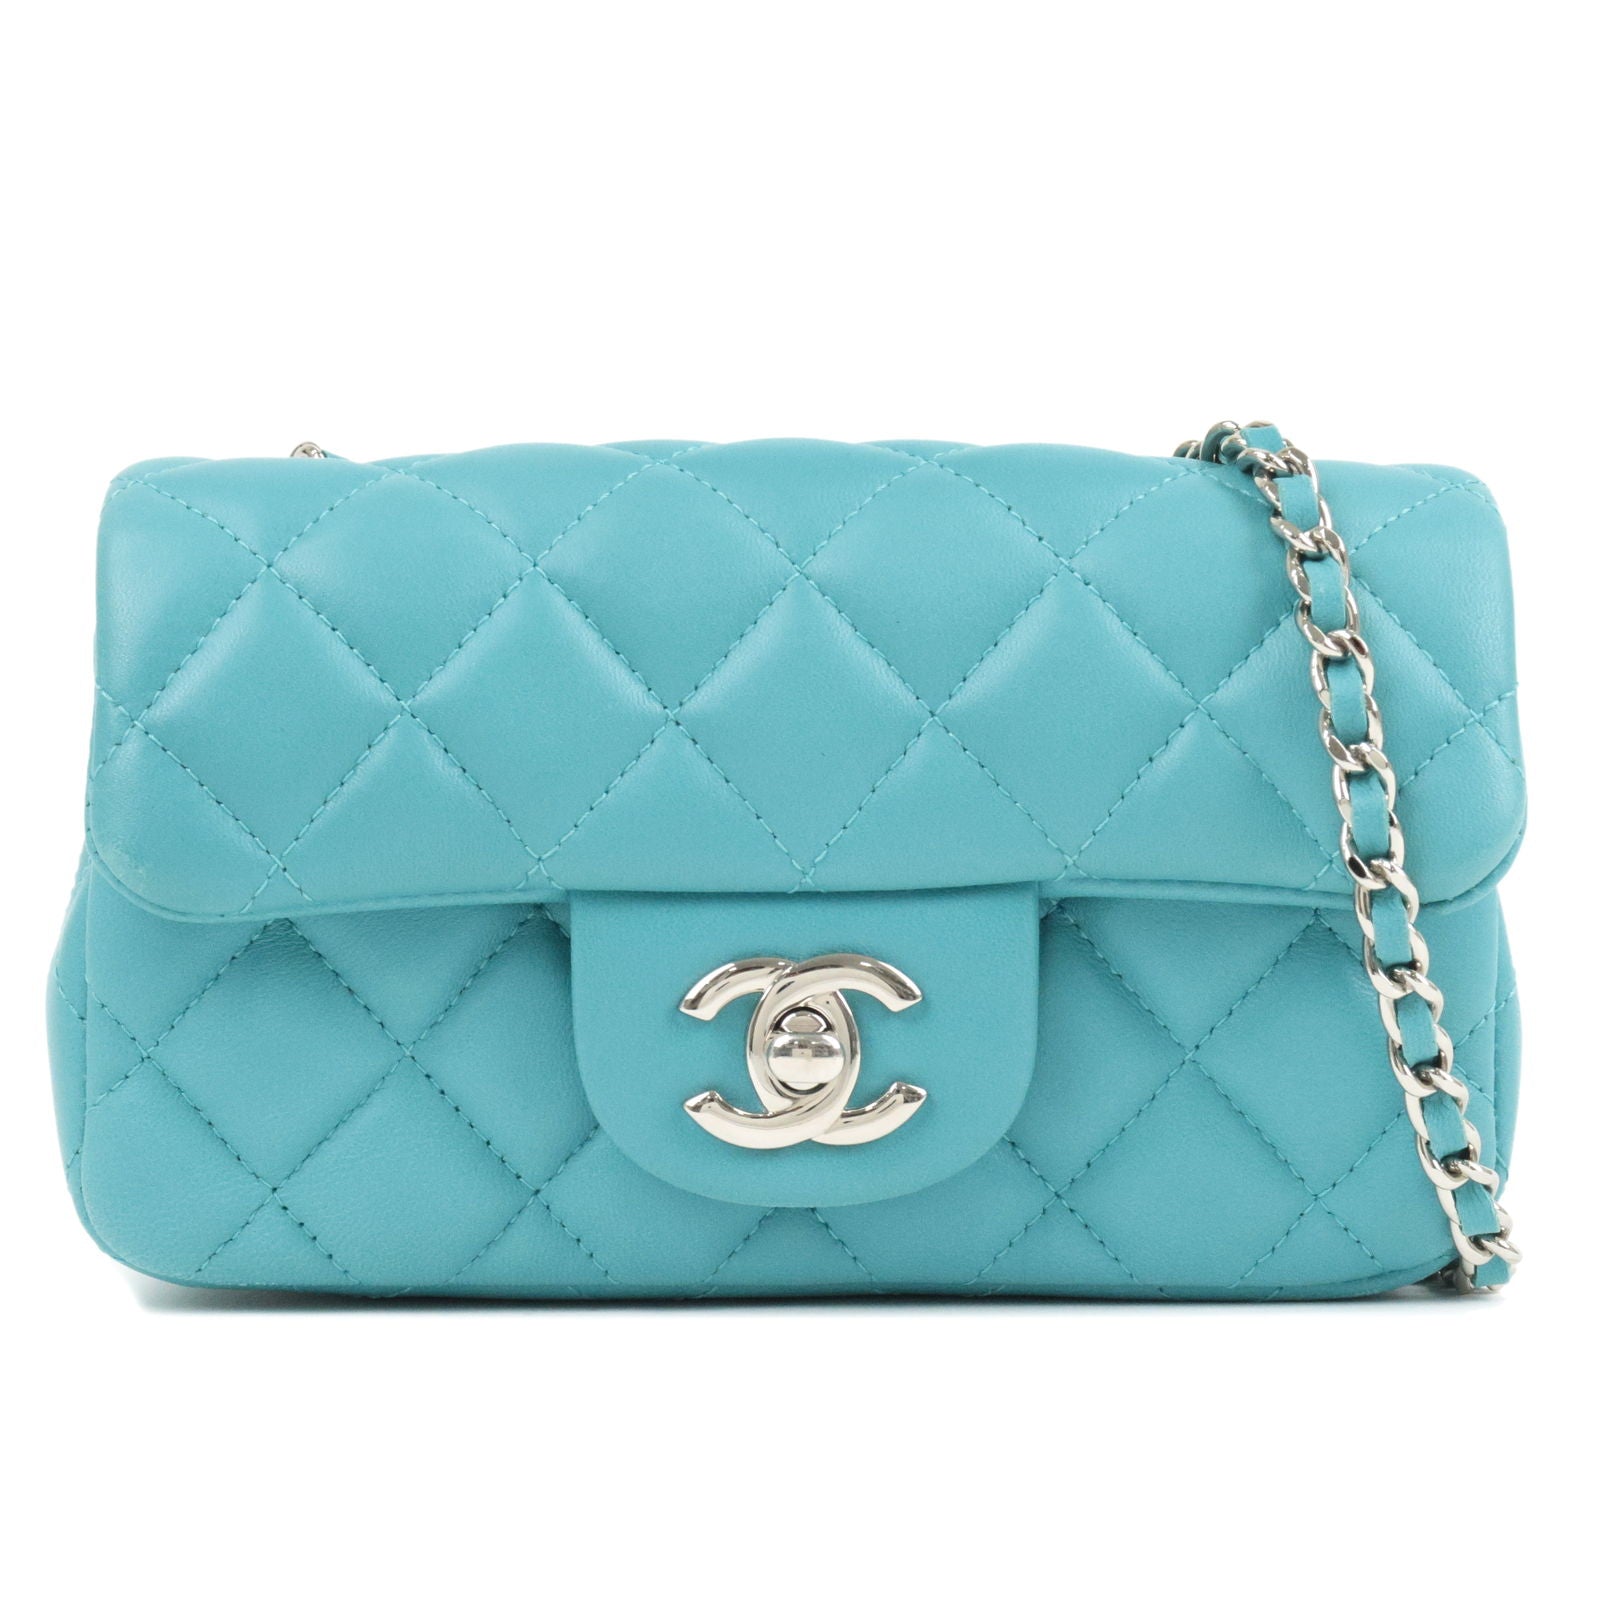 ep_vintage luxury Store - Lamb - Matelasse - Turquoise - Chain - Bag - Blue  – dct - Chanel sleeveless top - Shoulder - CHANEL - Mini - Skin